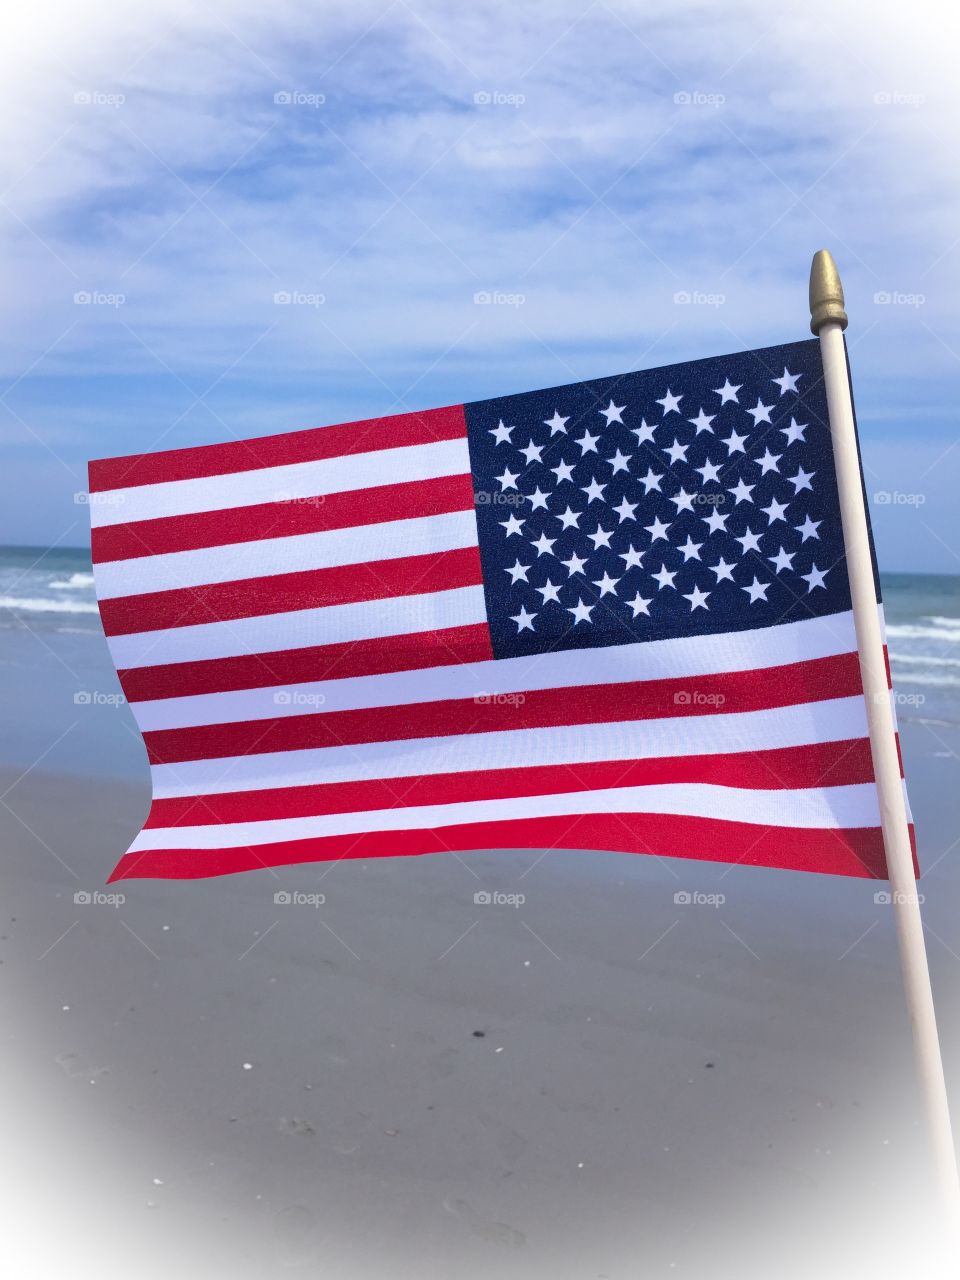 American flag. An American flag flies by the seashore.